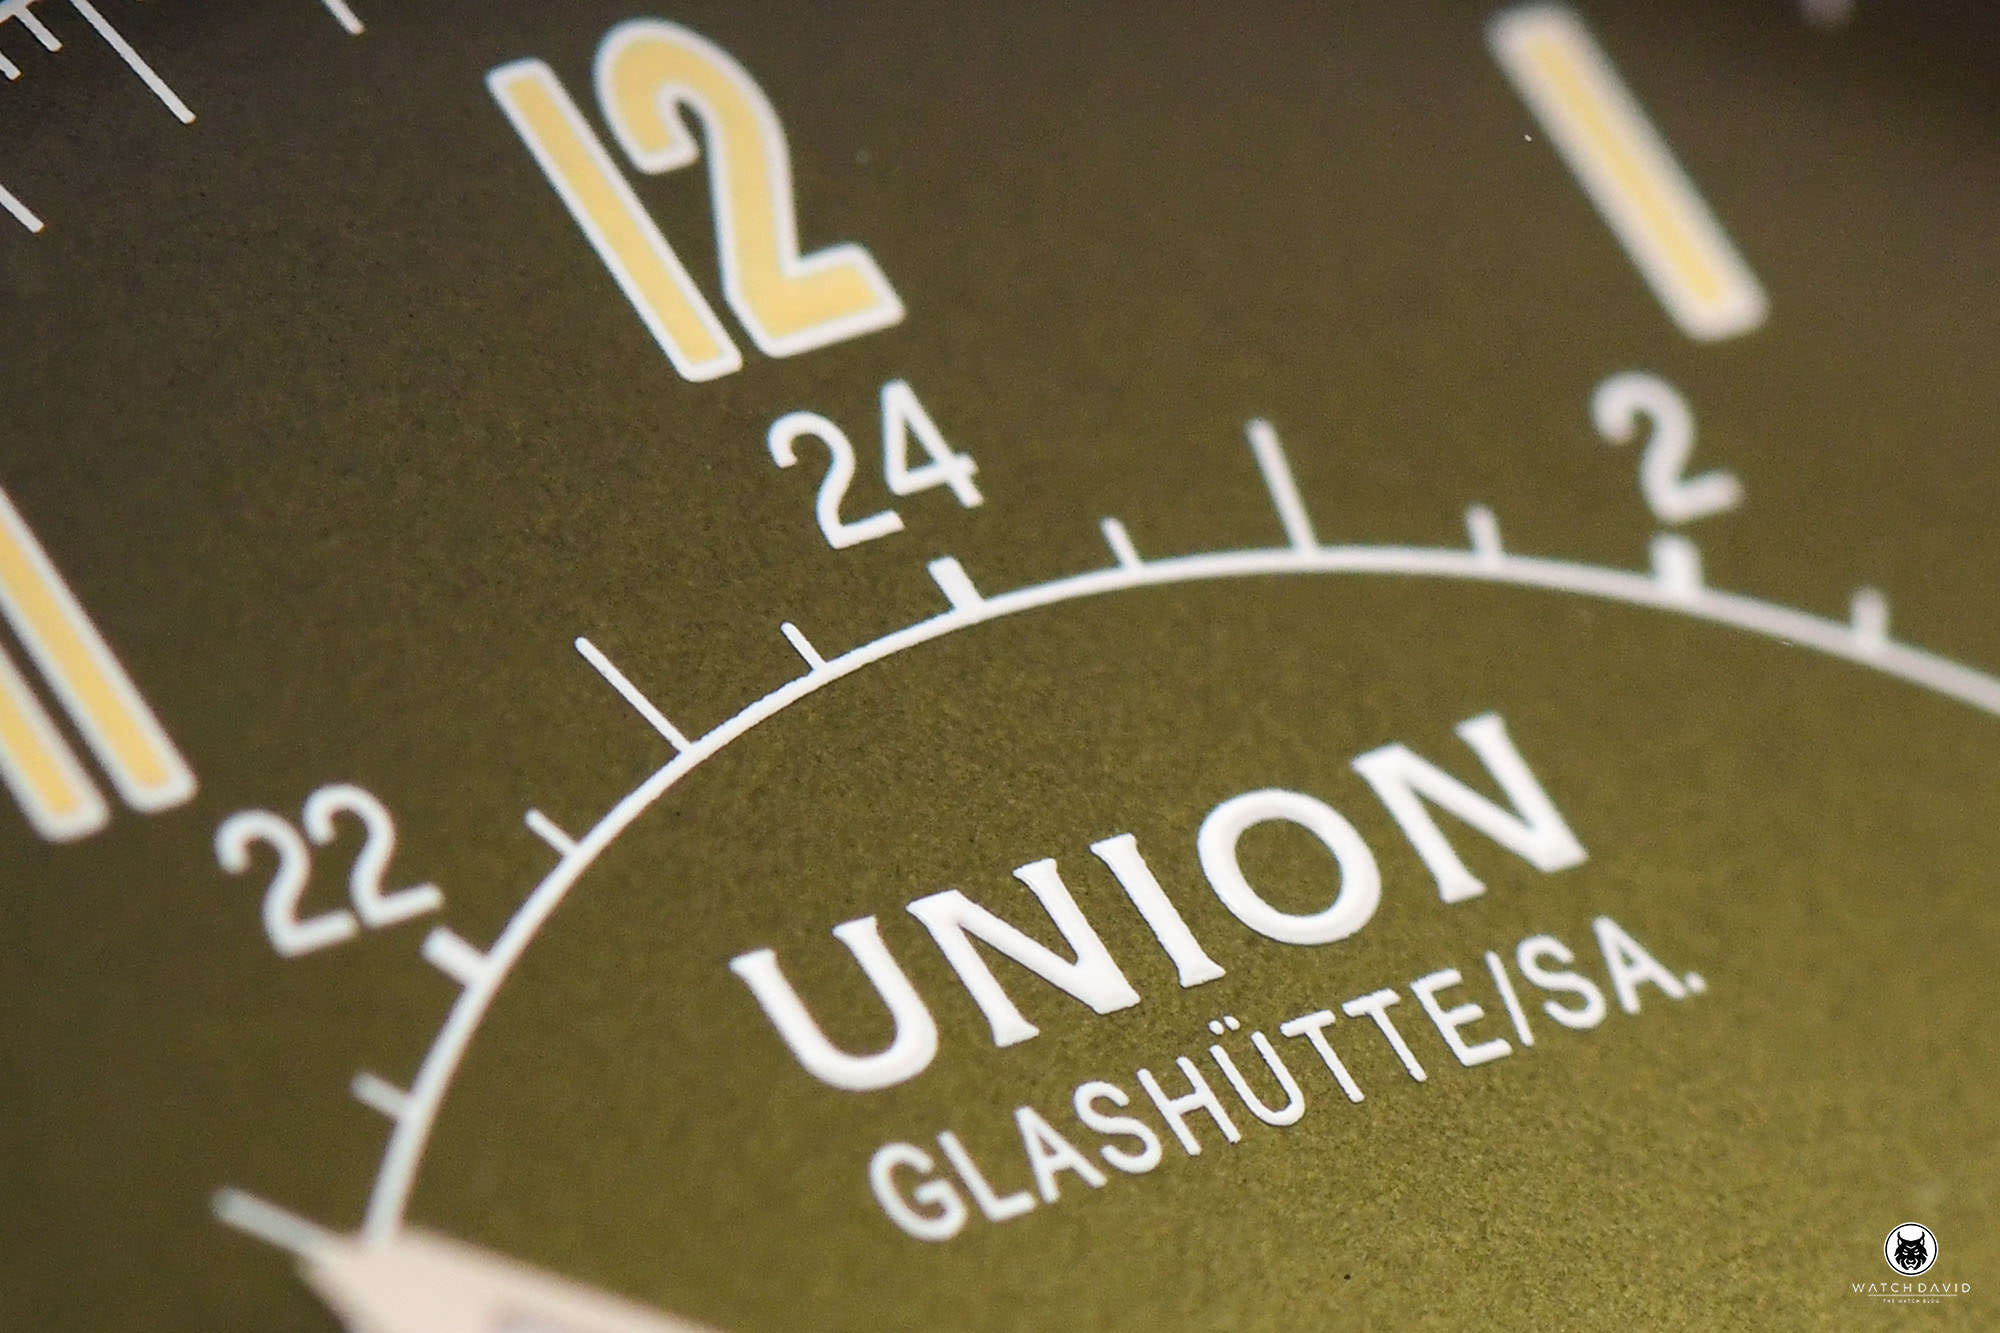 Union Glashütte Belisar Zeitzone Review